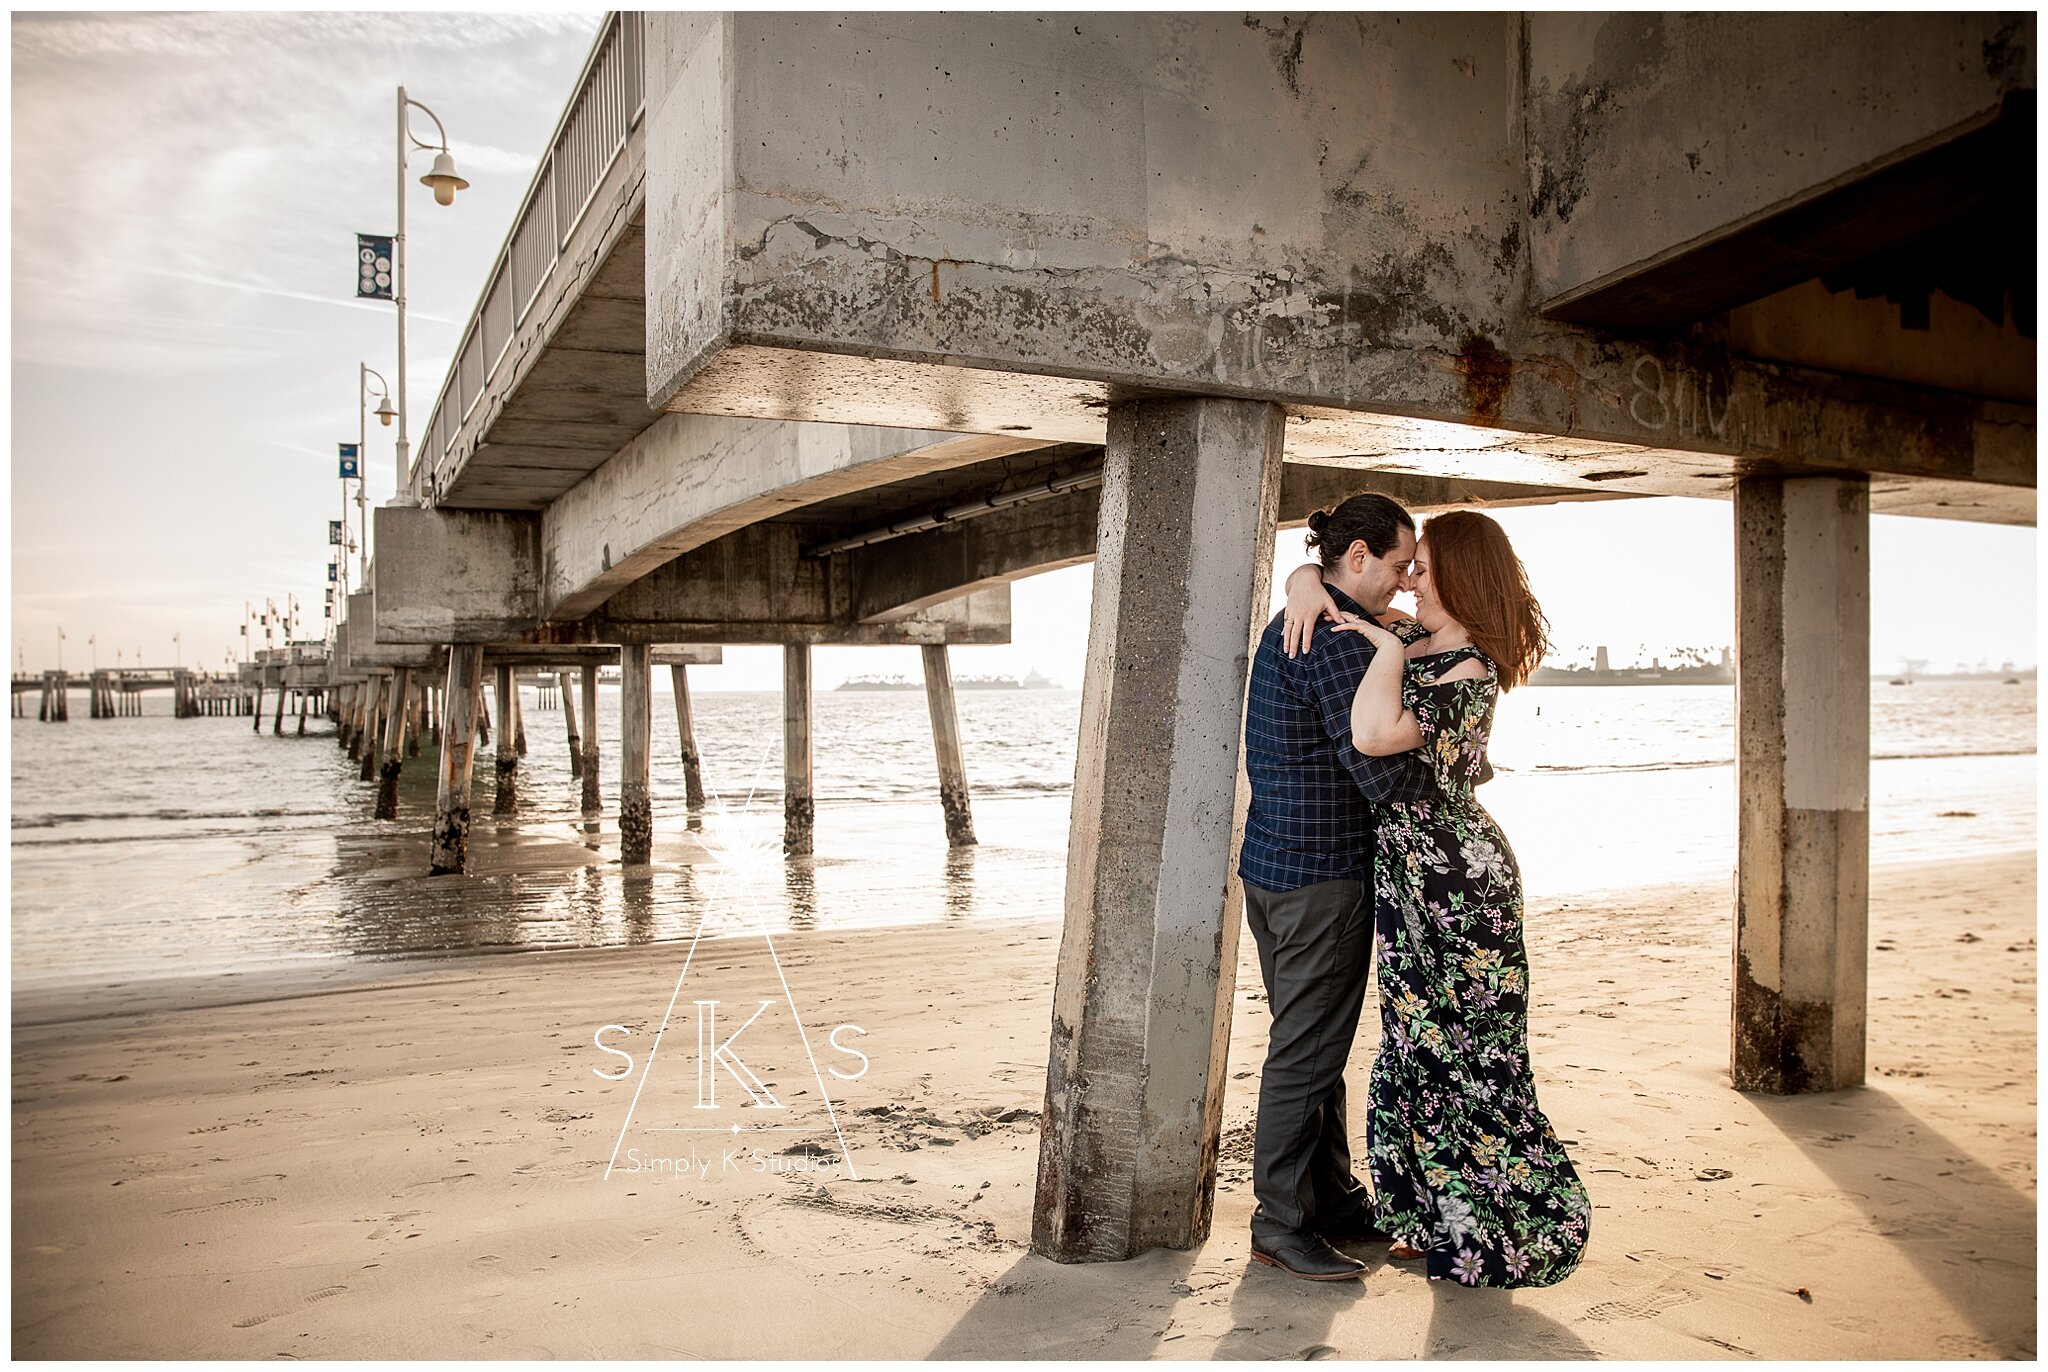  Couple kissing at the beach near a pier 